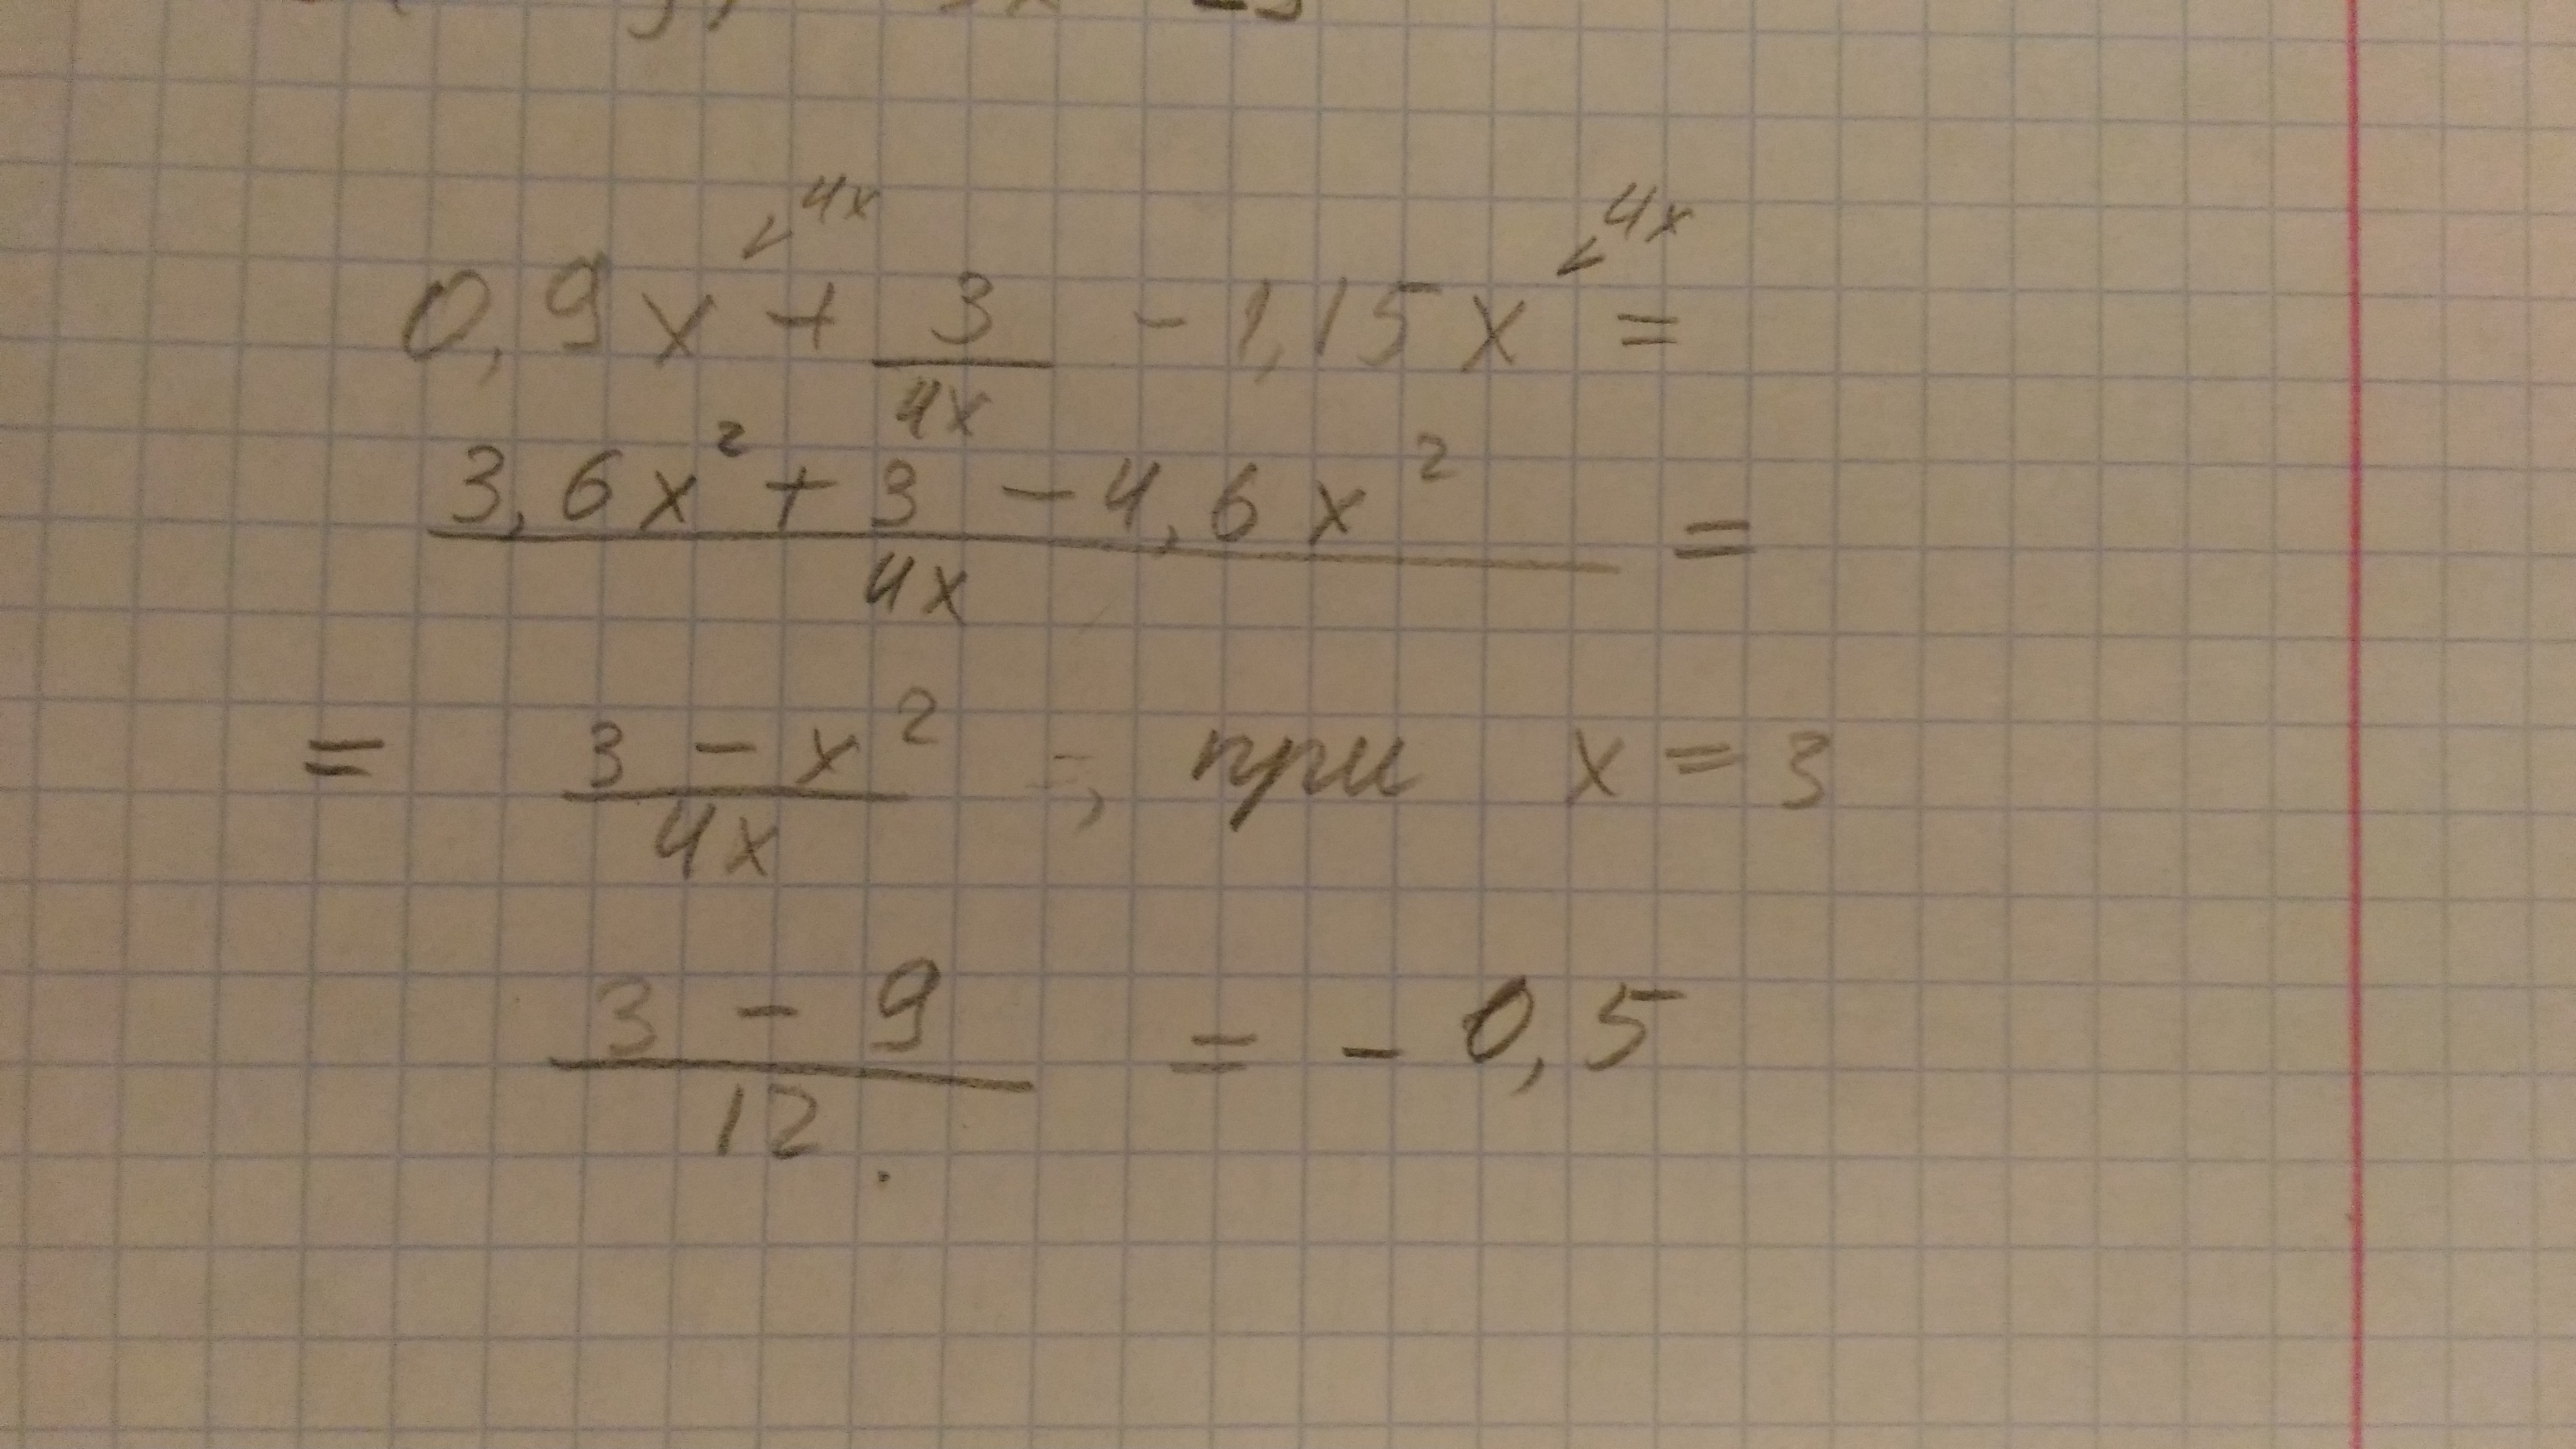 4x 3 4x 5 11. |-4|+|1-3x| при x. [3x-3]-4x при x= -2. 4 4 5 X X      при x  3. 3x-|4x+15| при x=-8.